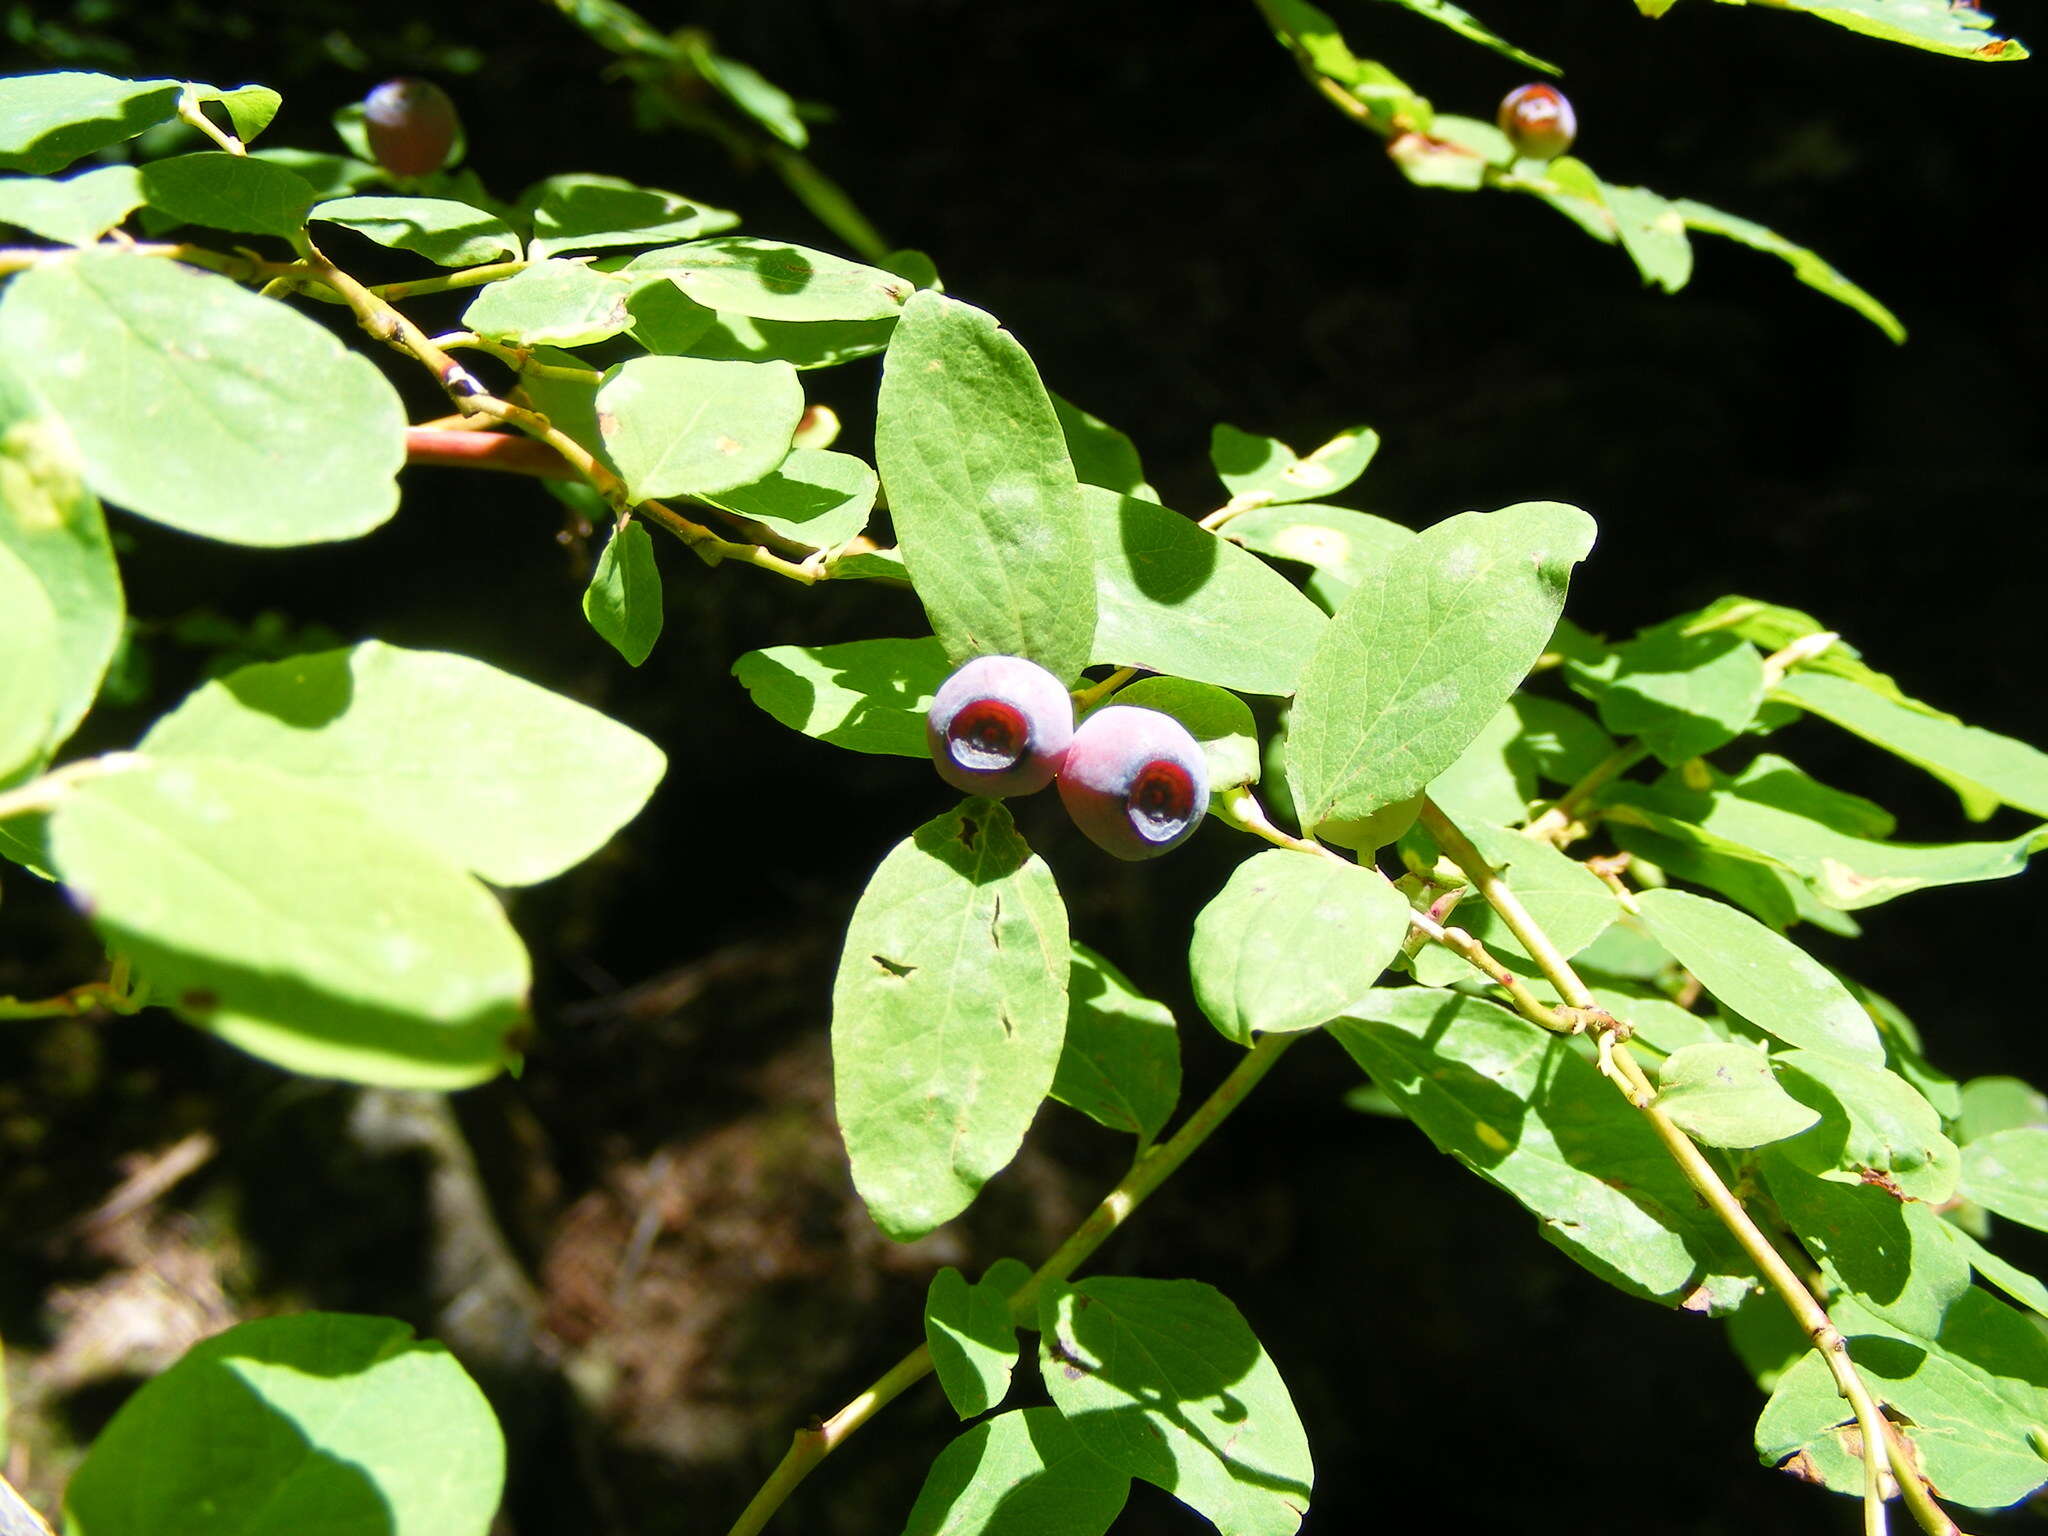 Image of Alaska blueberry